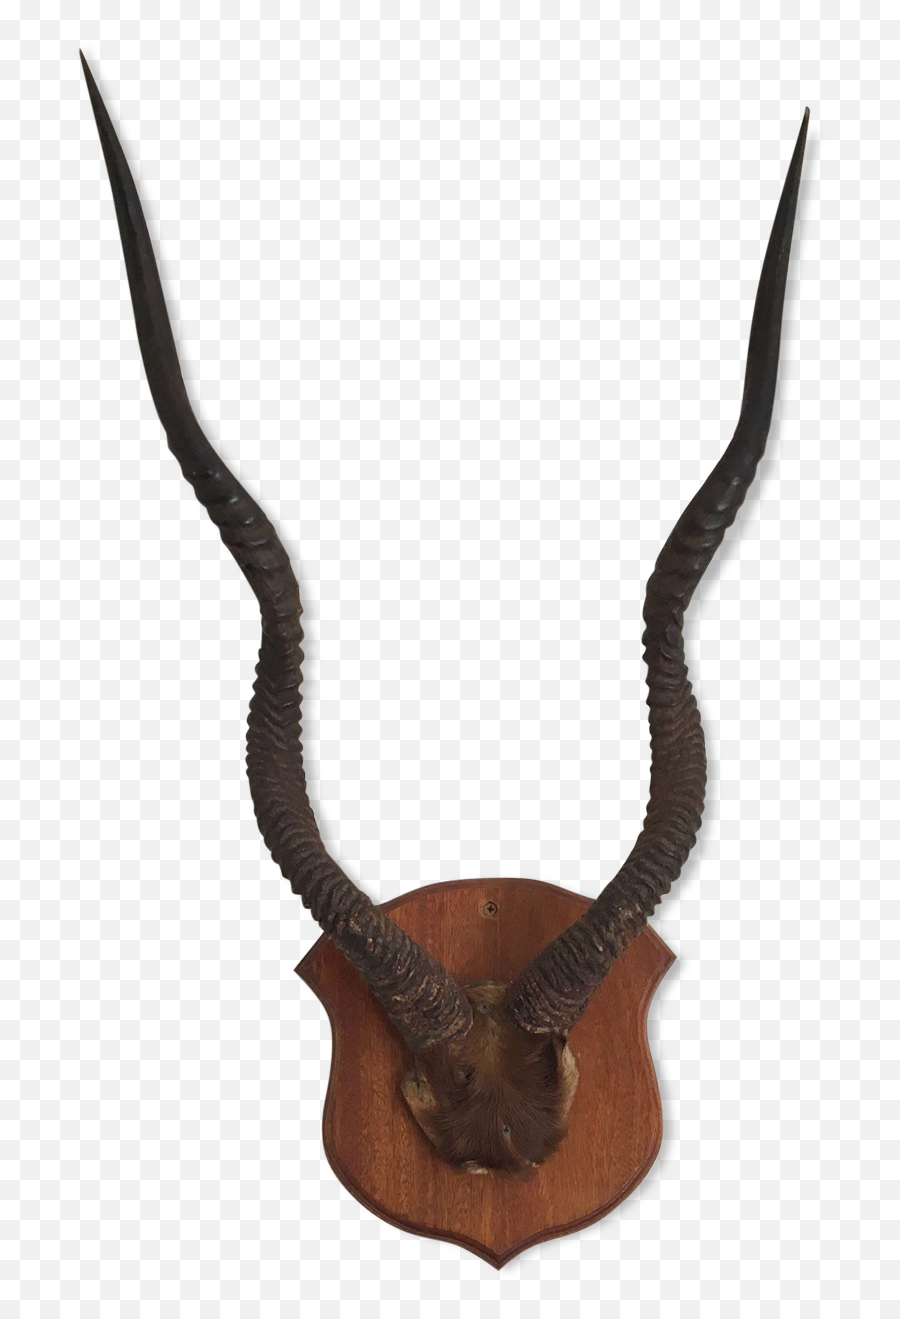 Download Hd Horn Antelope Or Gazelle Horns - Corne De Horn Png,Antelope Png